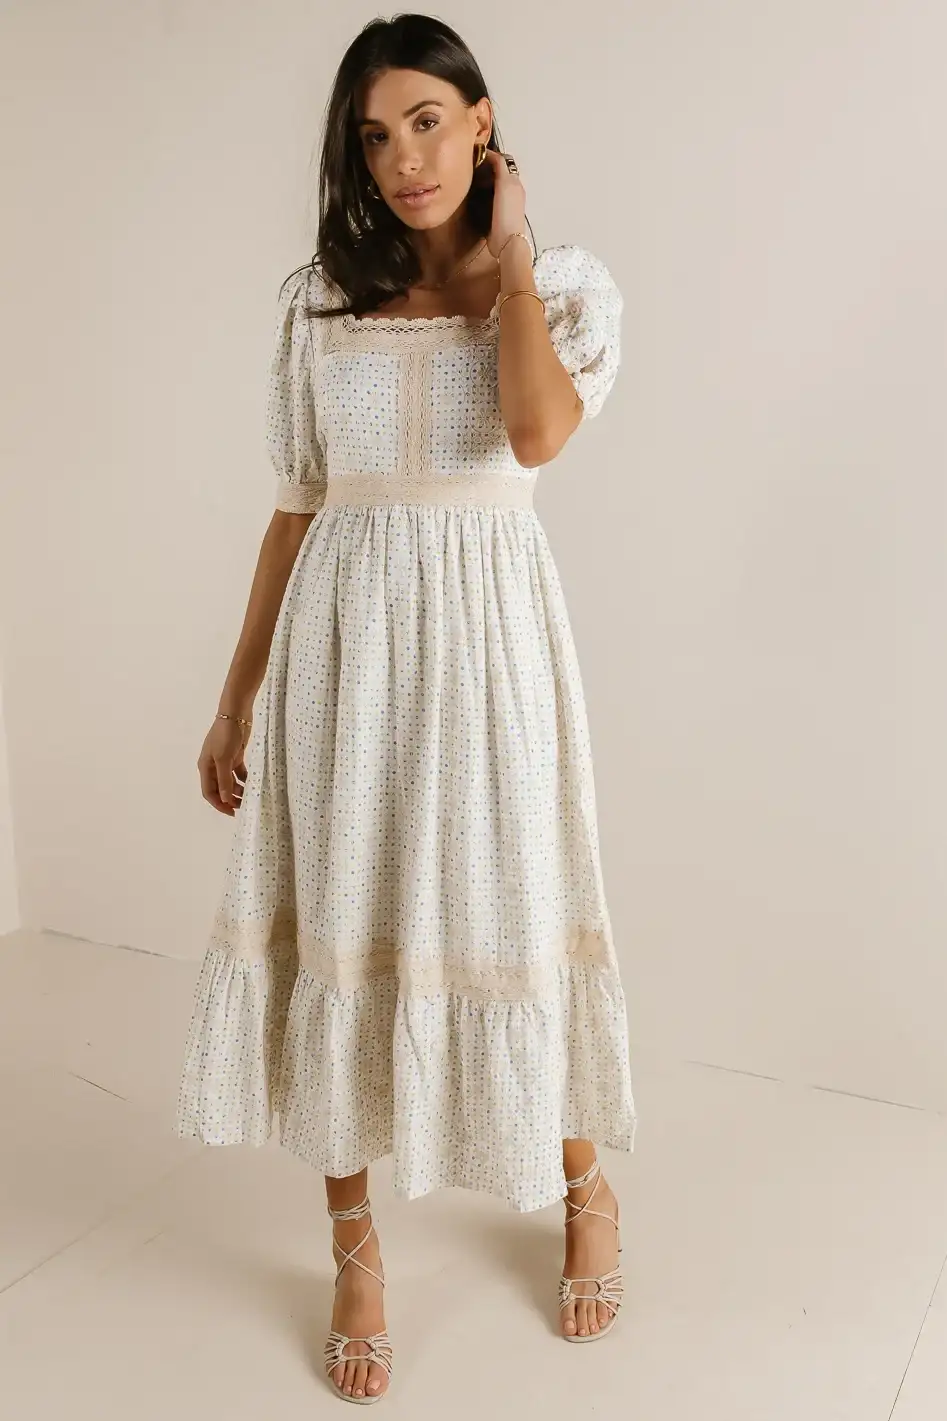 Image of Irelynn Polka Dot Dress